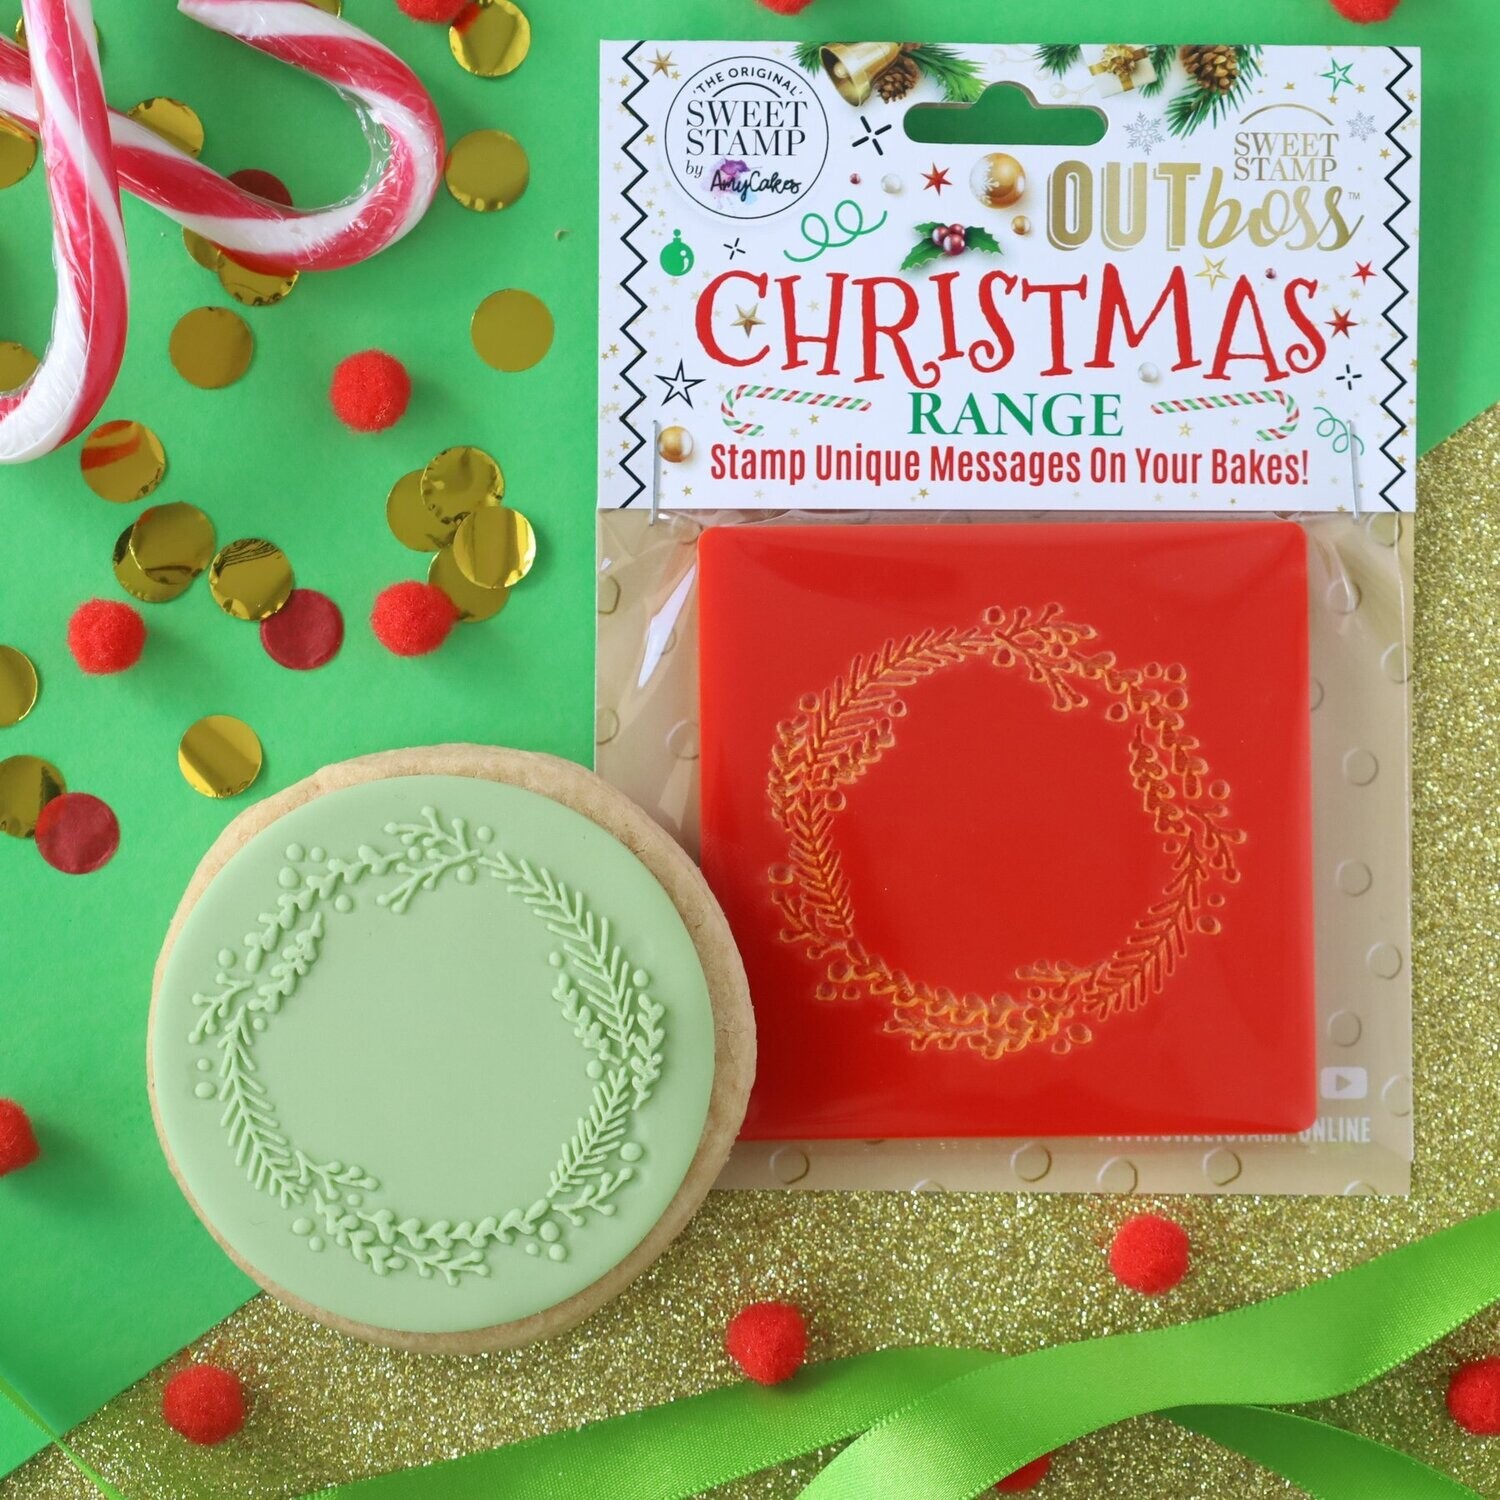 Sweet Stamp -OUTboss Christmas -WREATH - Χριστουγεννιάτικη Σφραγίδα Γιορτινό Στεφάνι